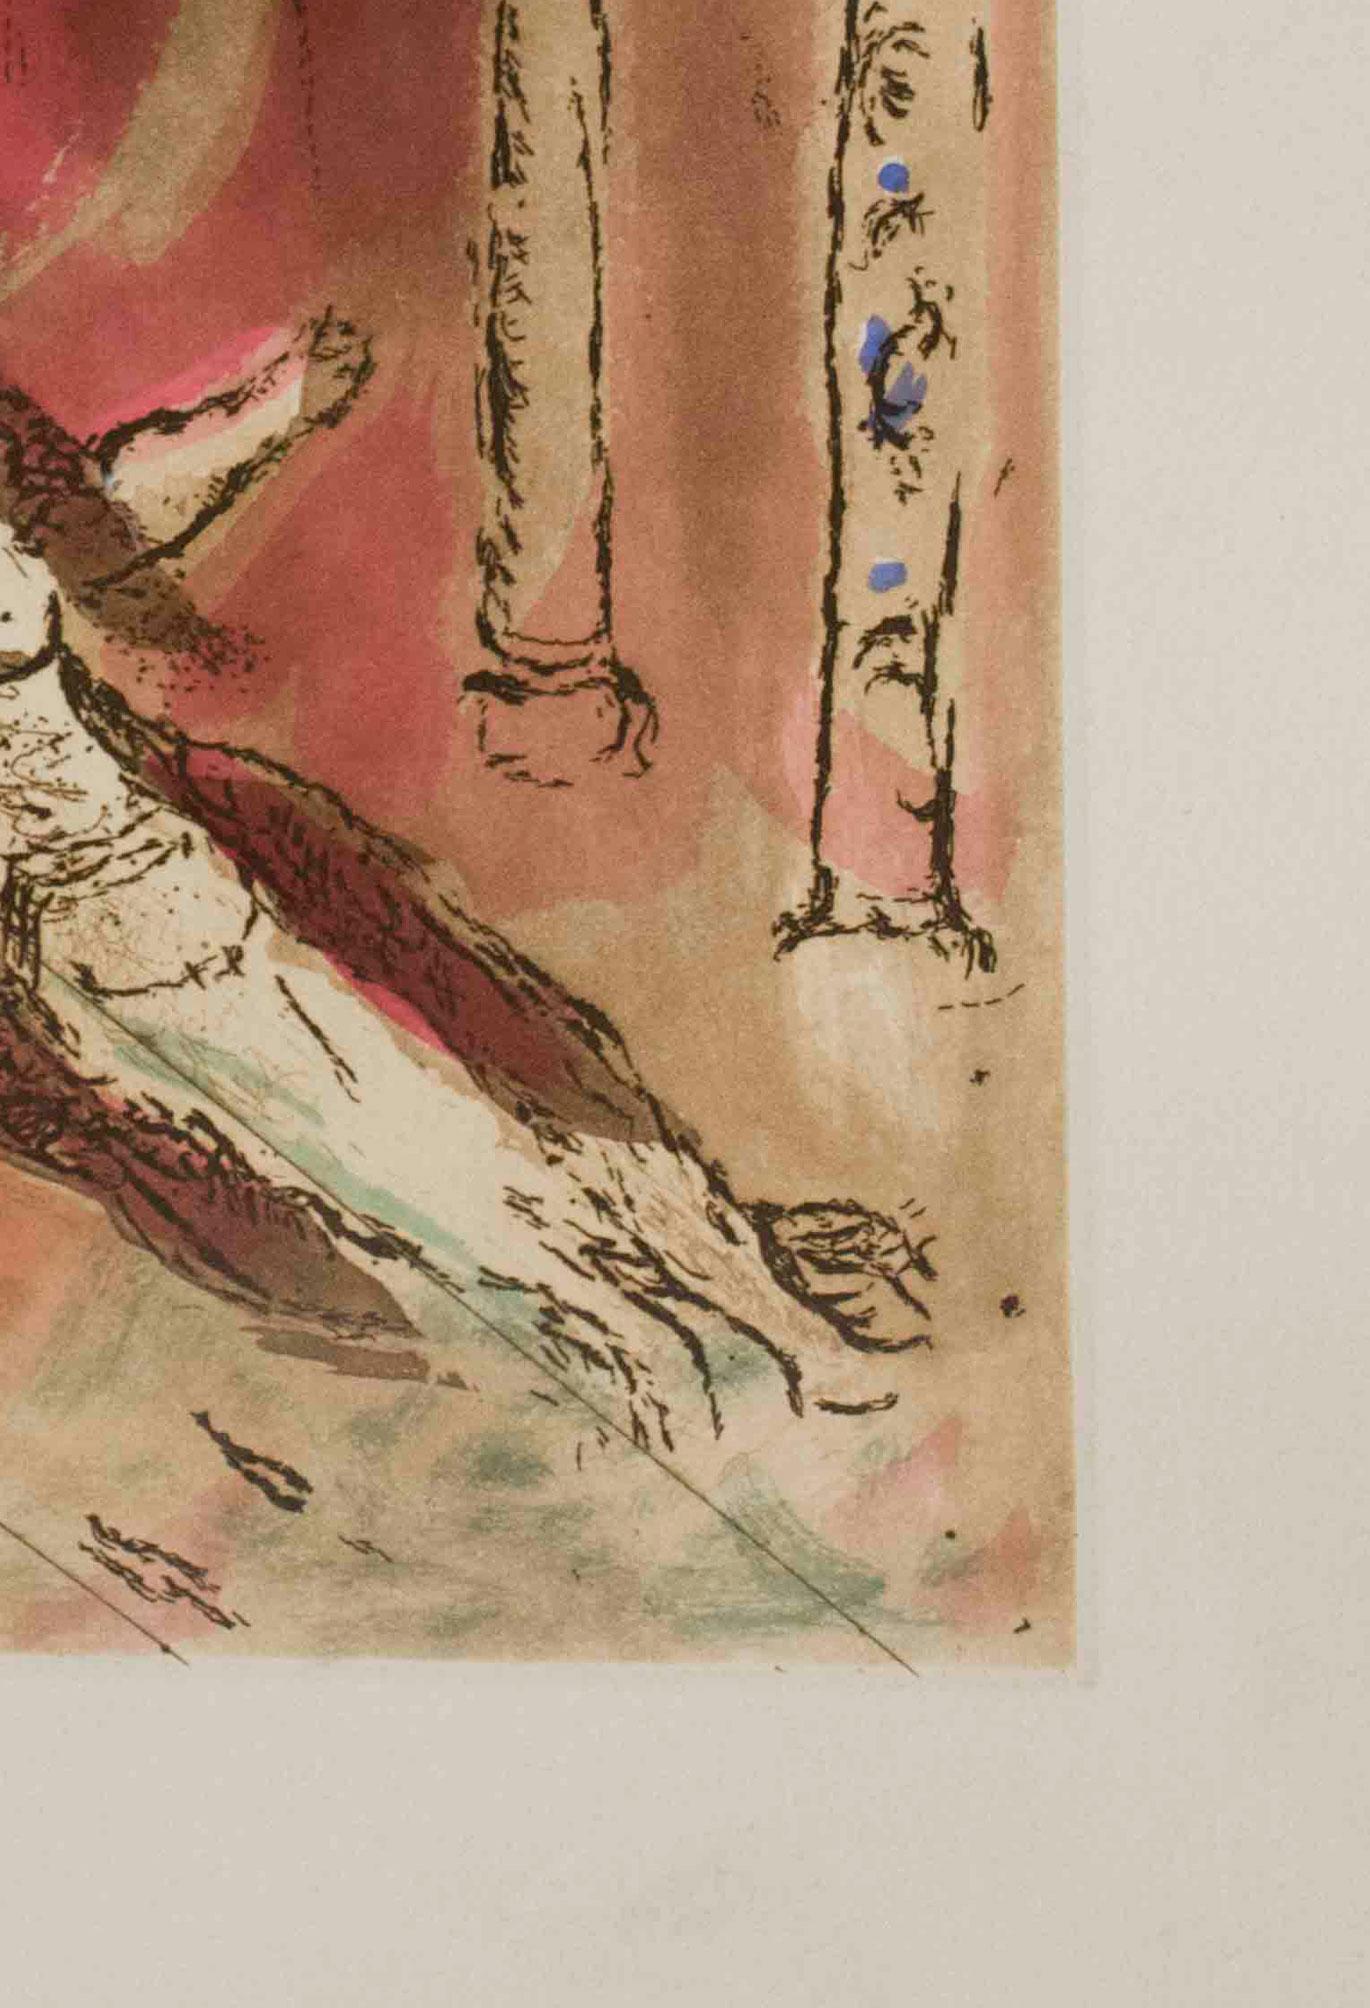 artist chagall signature